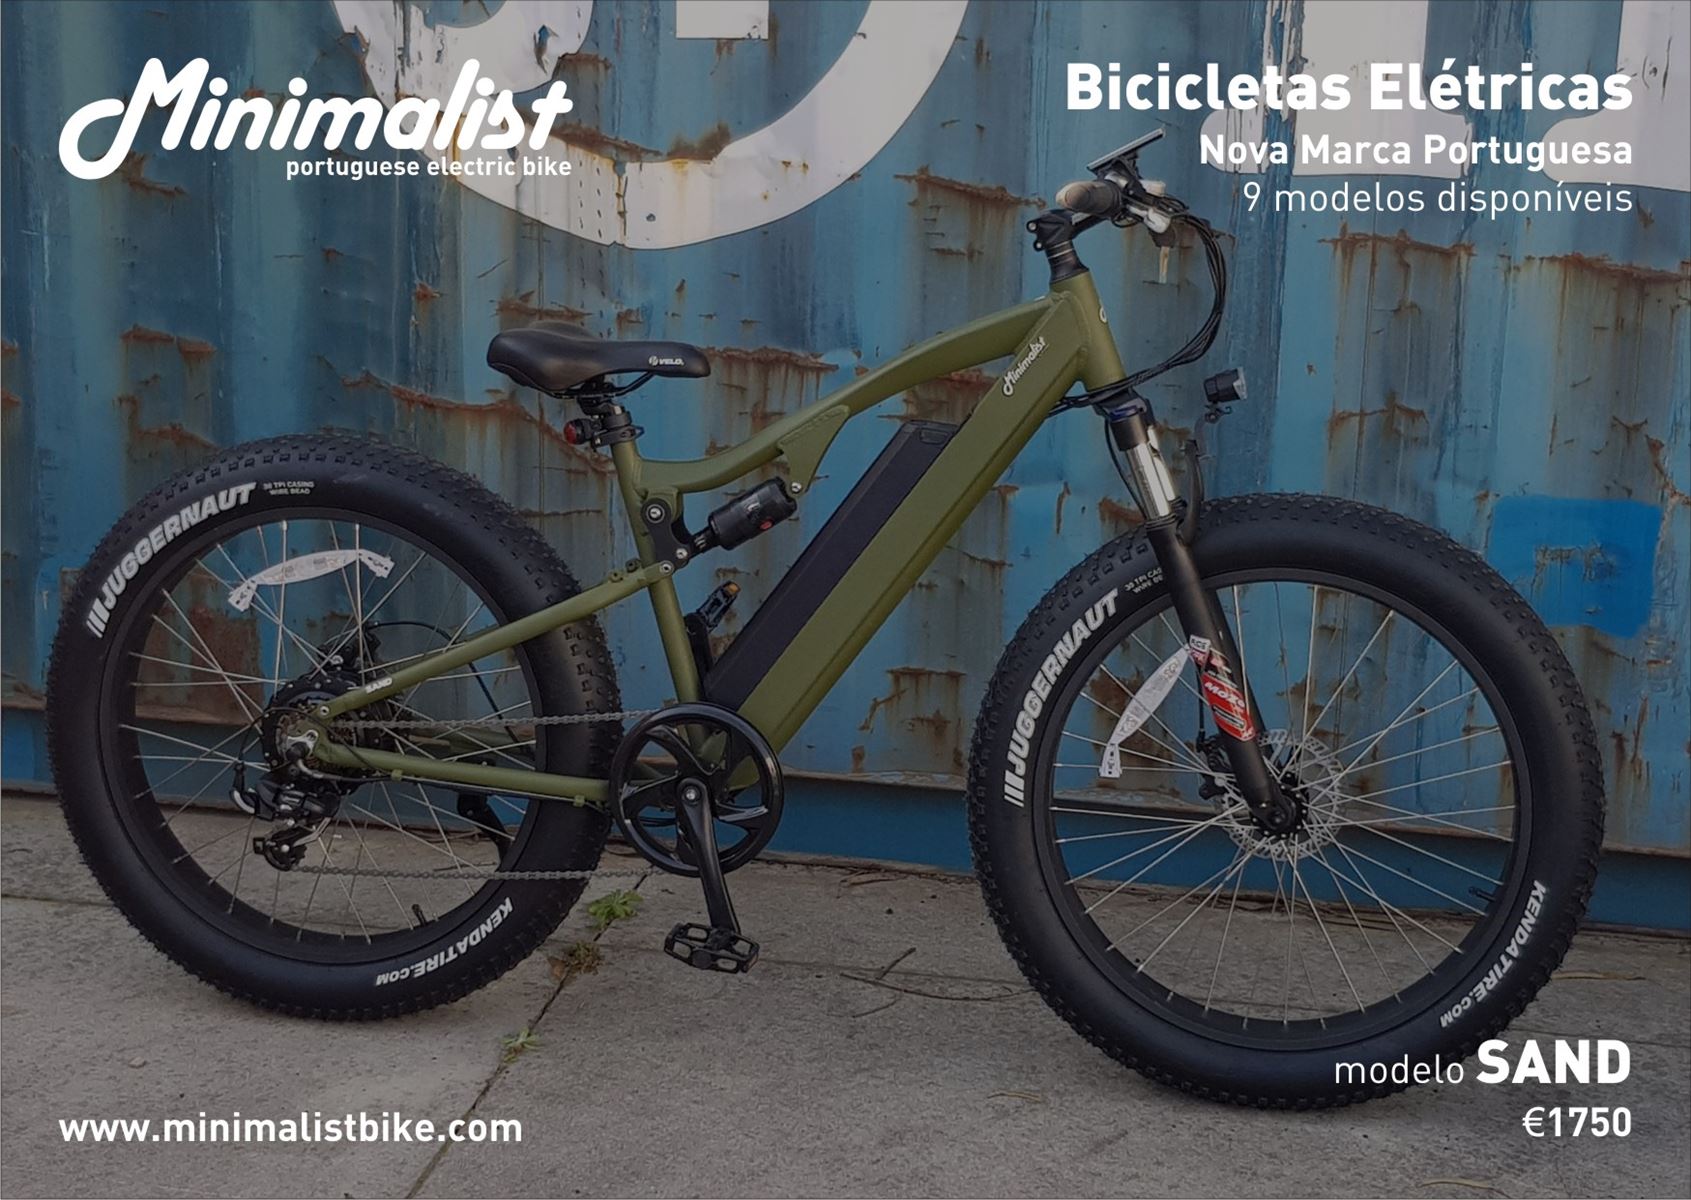 Minimalist, a primeira marca de bicicletas elétricas 